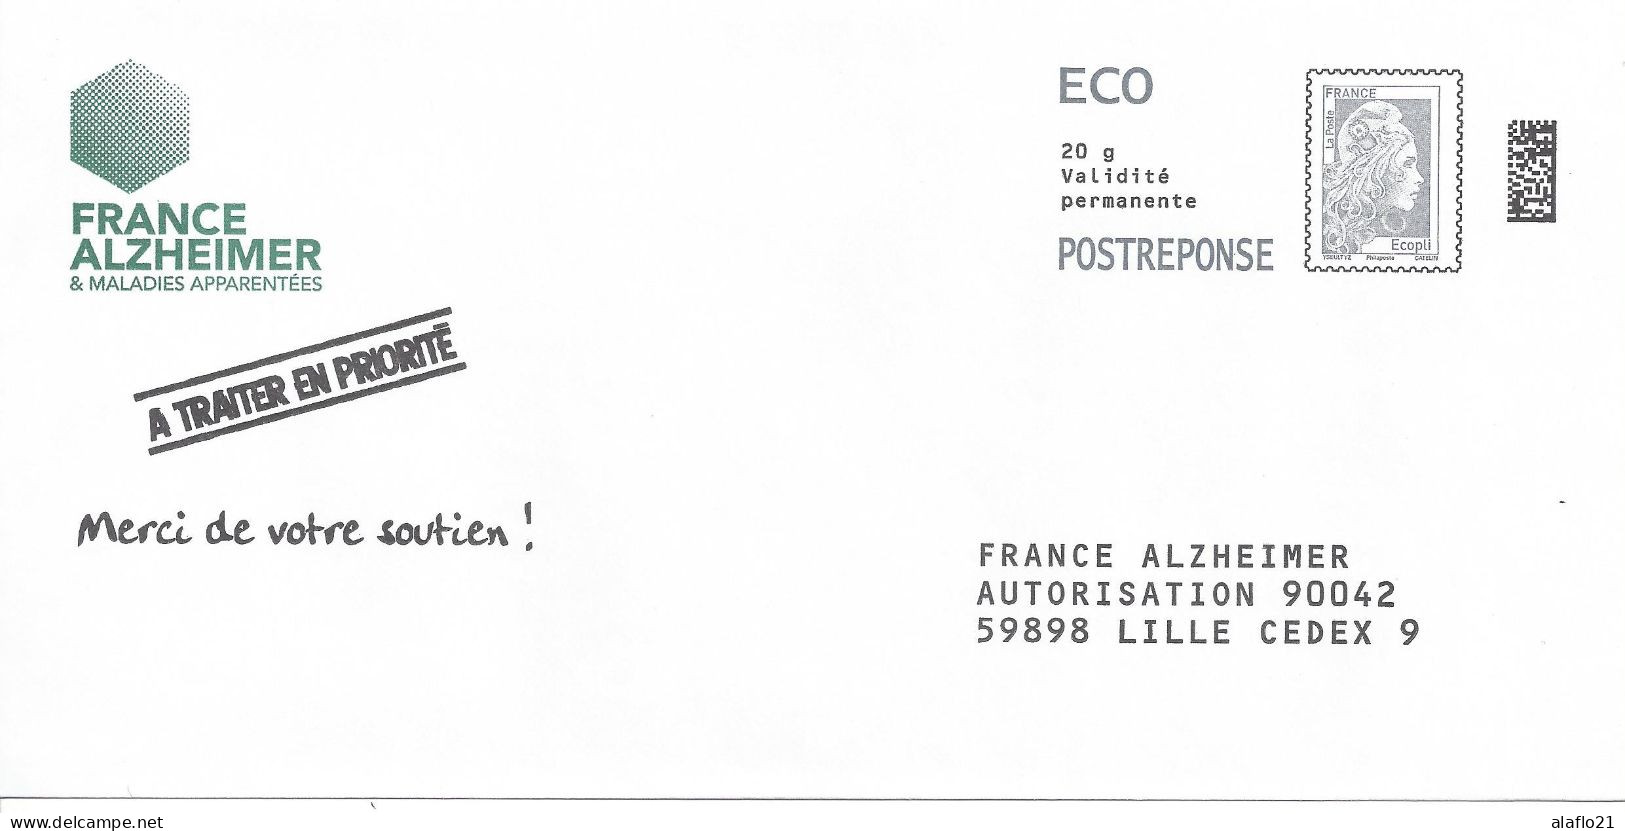 POSTREPONSE ECOPLI - MARIANNE L'ENGAGEE - FRANCE ALZHEIMER - Lot 401920 - PAP: Antwort